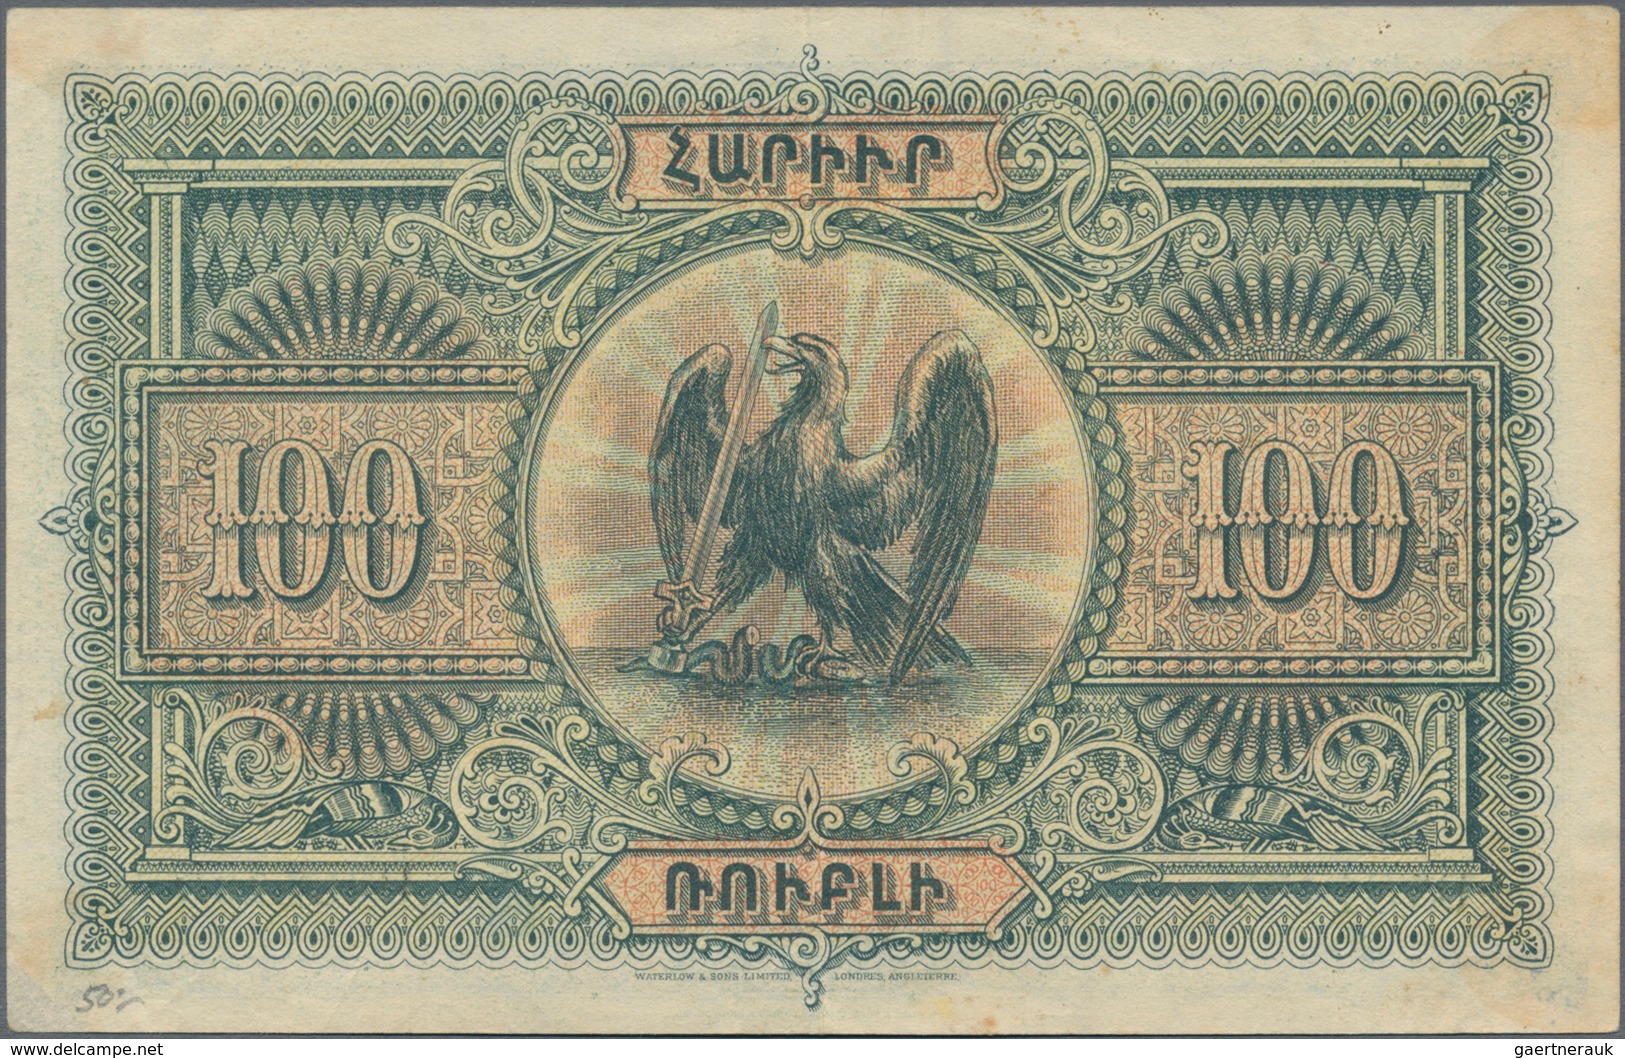 Armenia / Armenien: Set With 4 Banknotes Armenia And Azerbaijan With 50, 100, 250 And 500 Rubles P.3 - Armenia